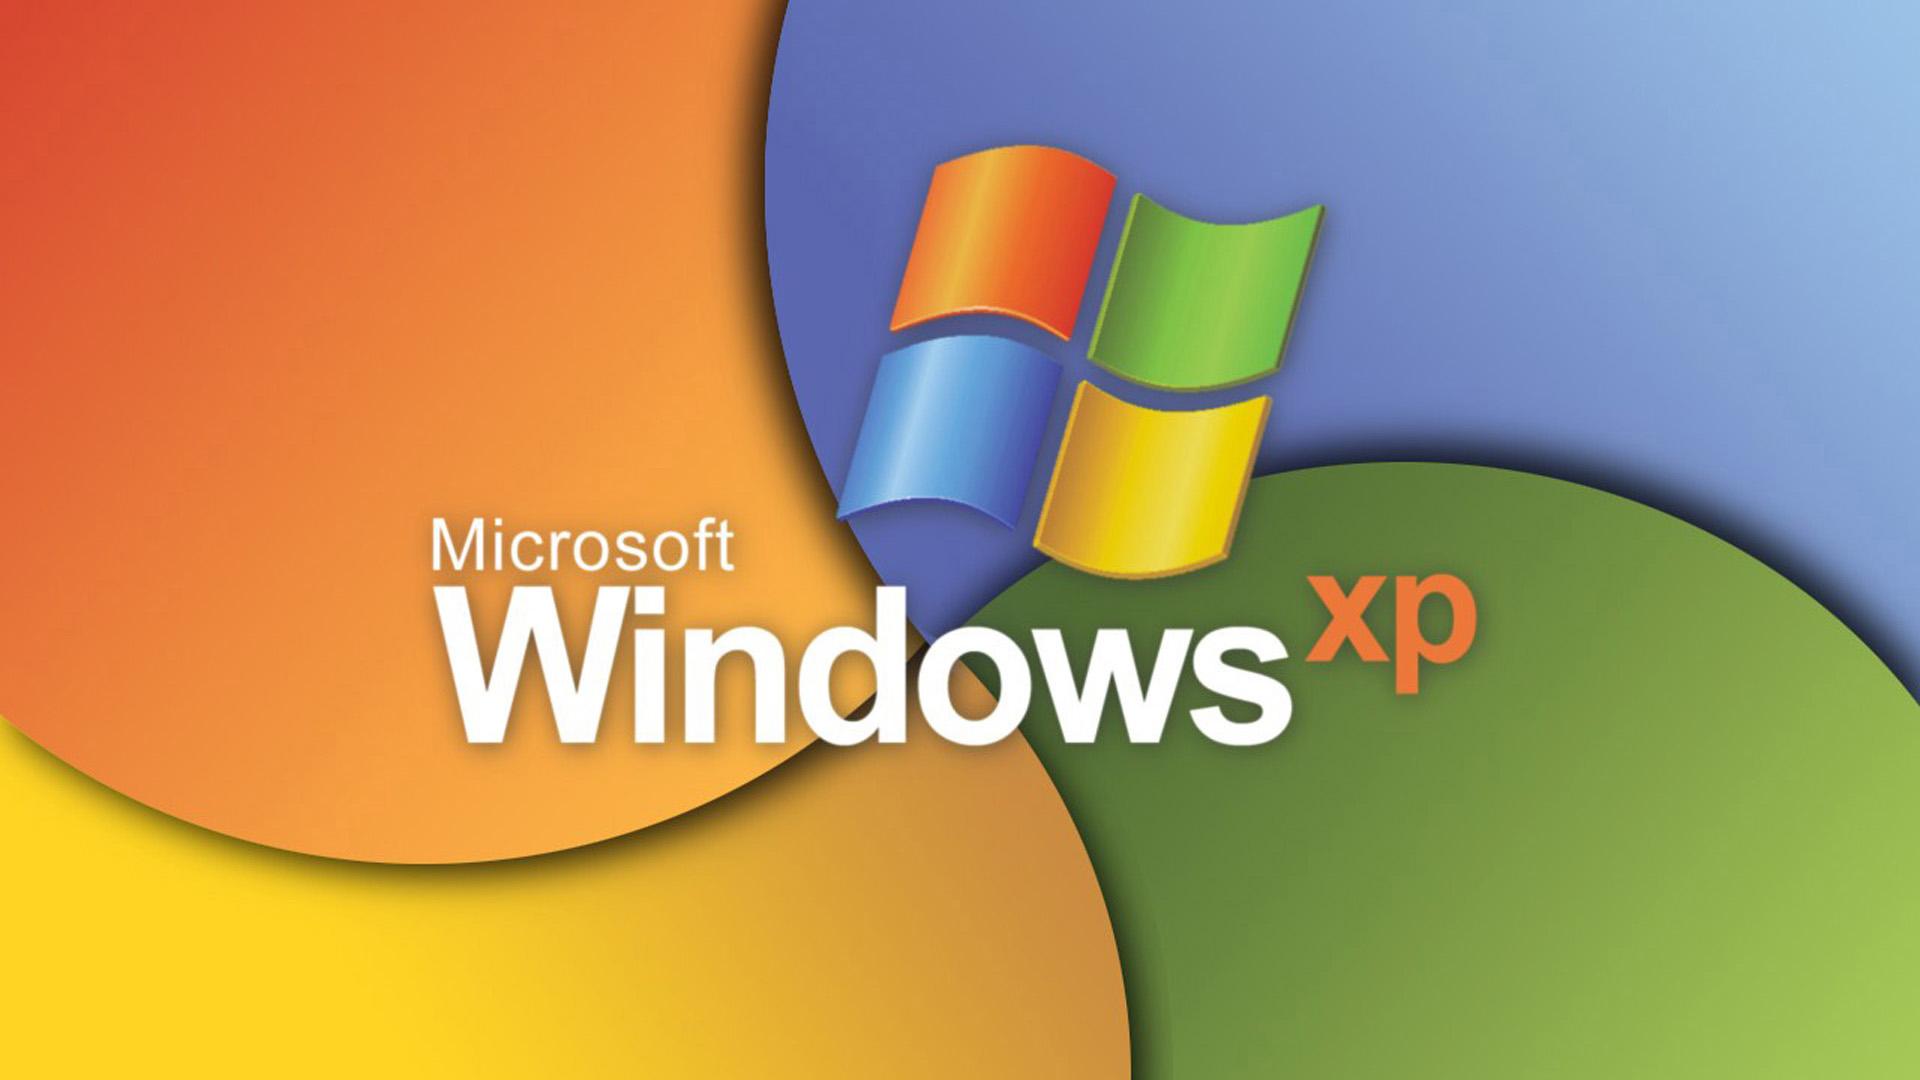 XP Logo - Windows XP Logo Wallpaper HD 1920x1080 Computer Services